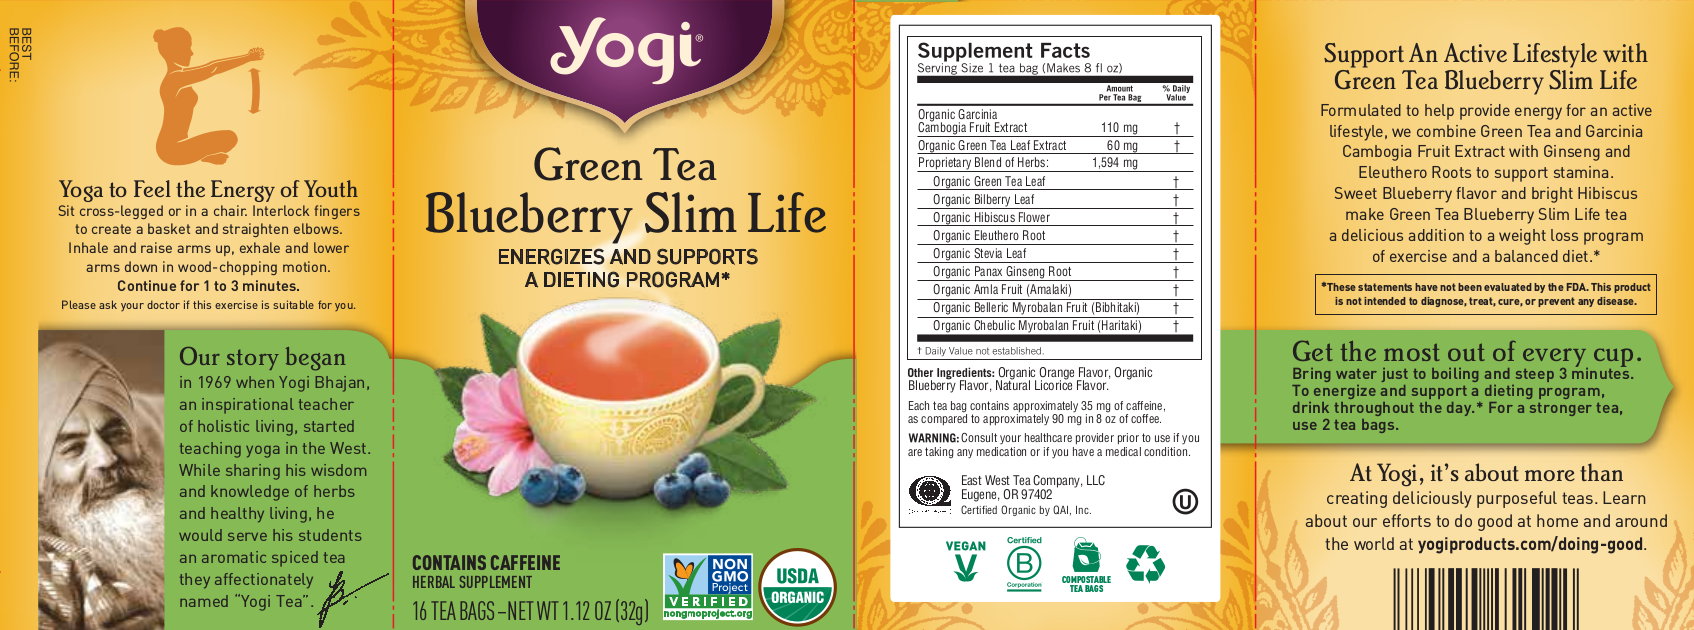 Yogi Teas Green Tea Blueberry Slim Life 16 bags